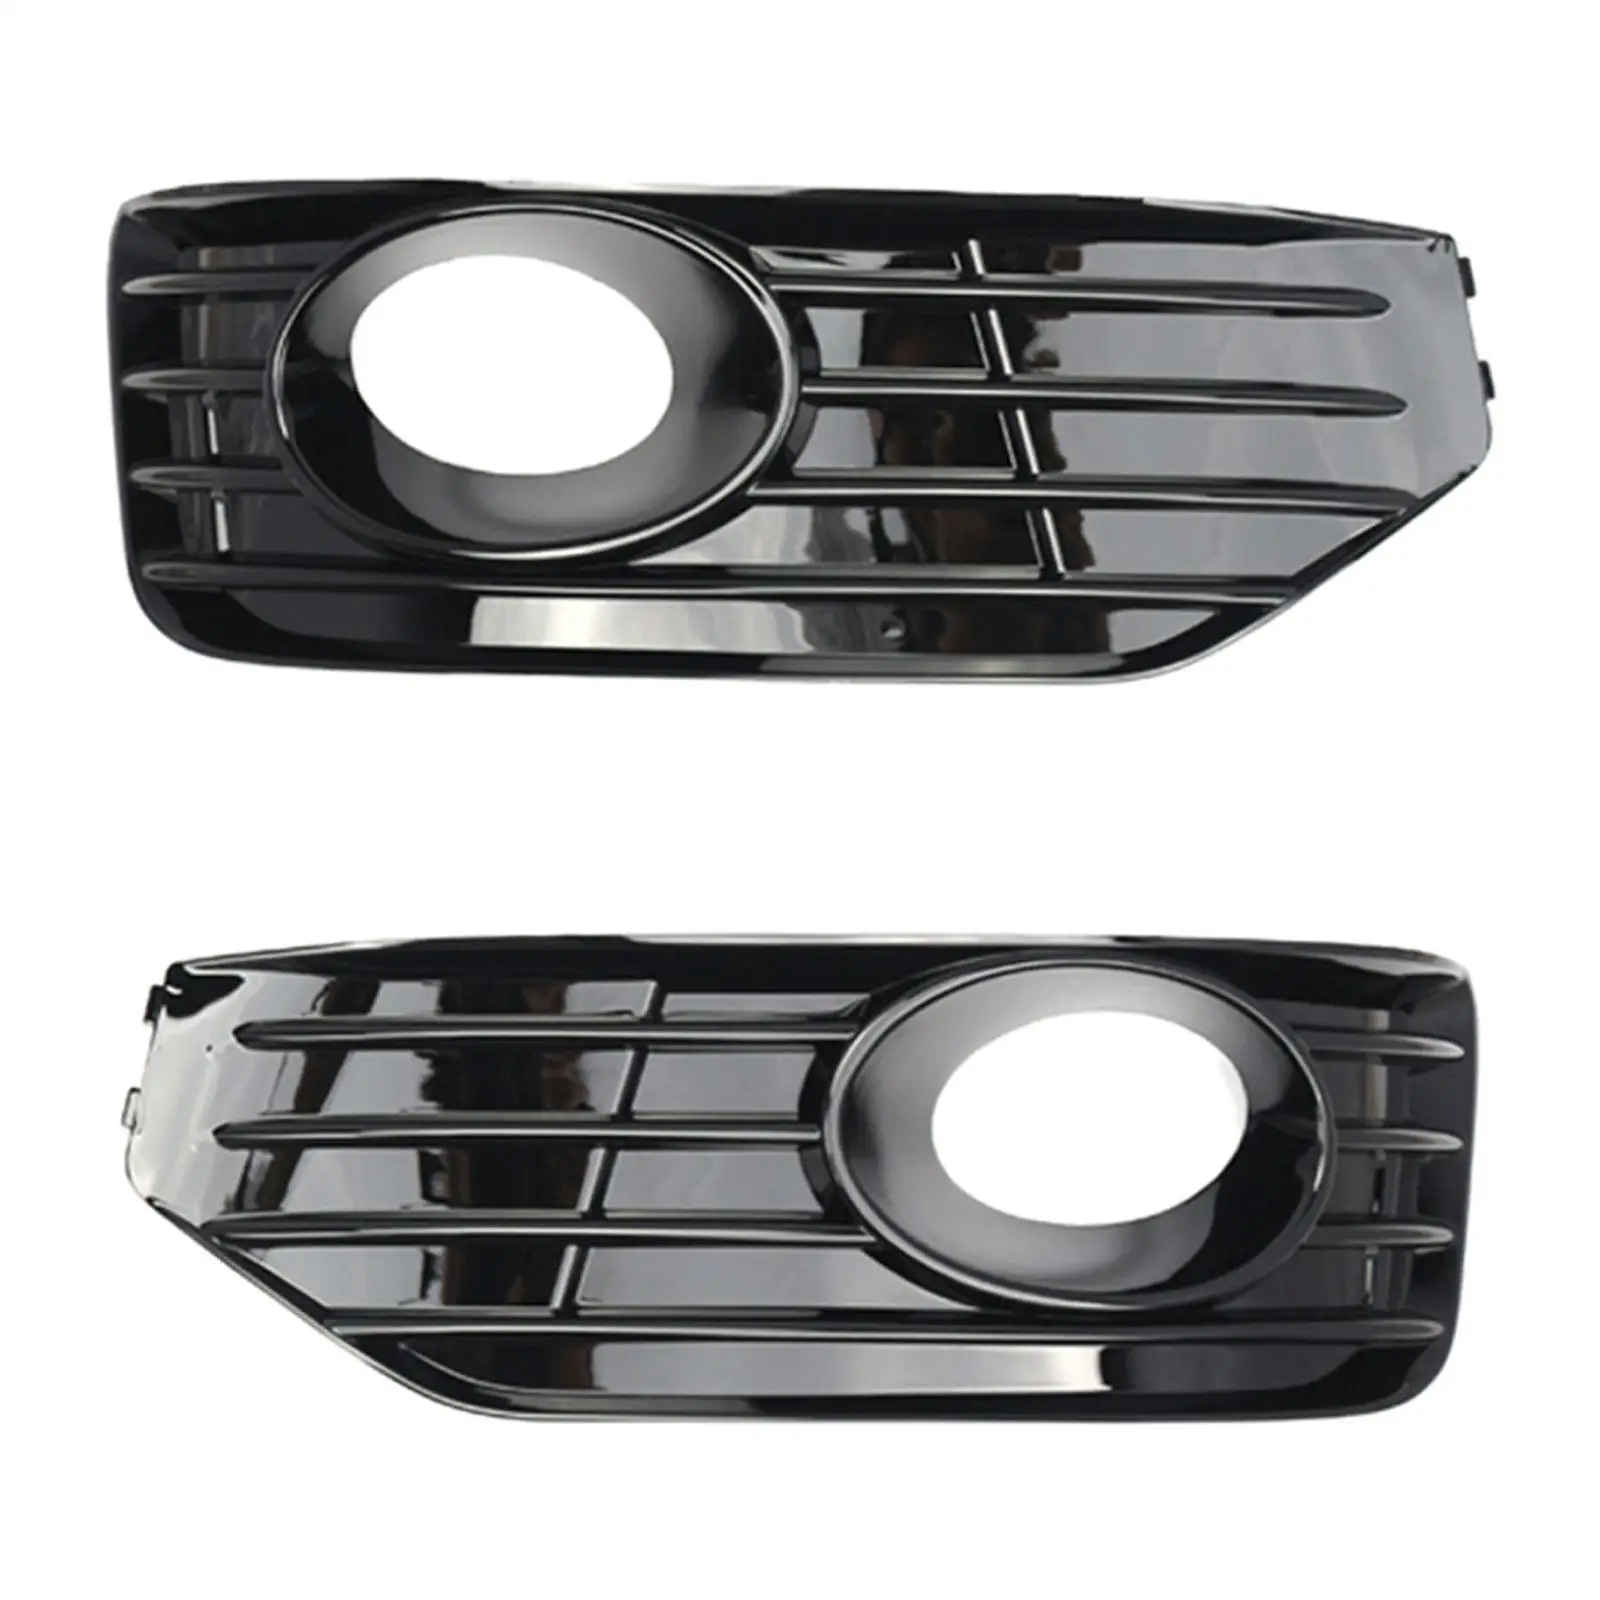 2x Fog Light Cover Grilles Parts Front Bumper Wear Resistant Replace Fog Lamps Grille for VW T5.1 Sportline 2010-2015